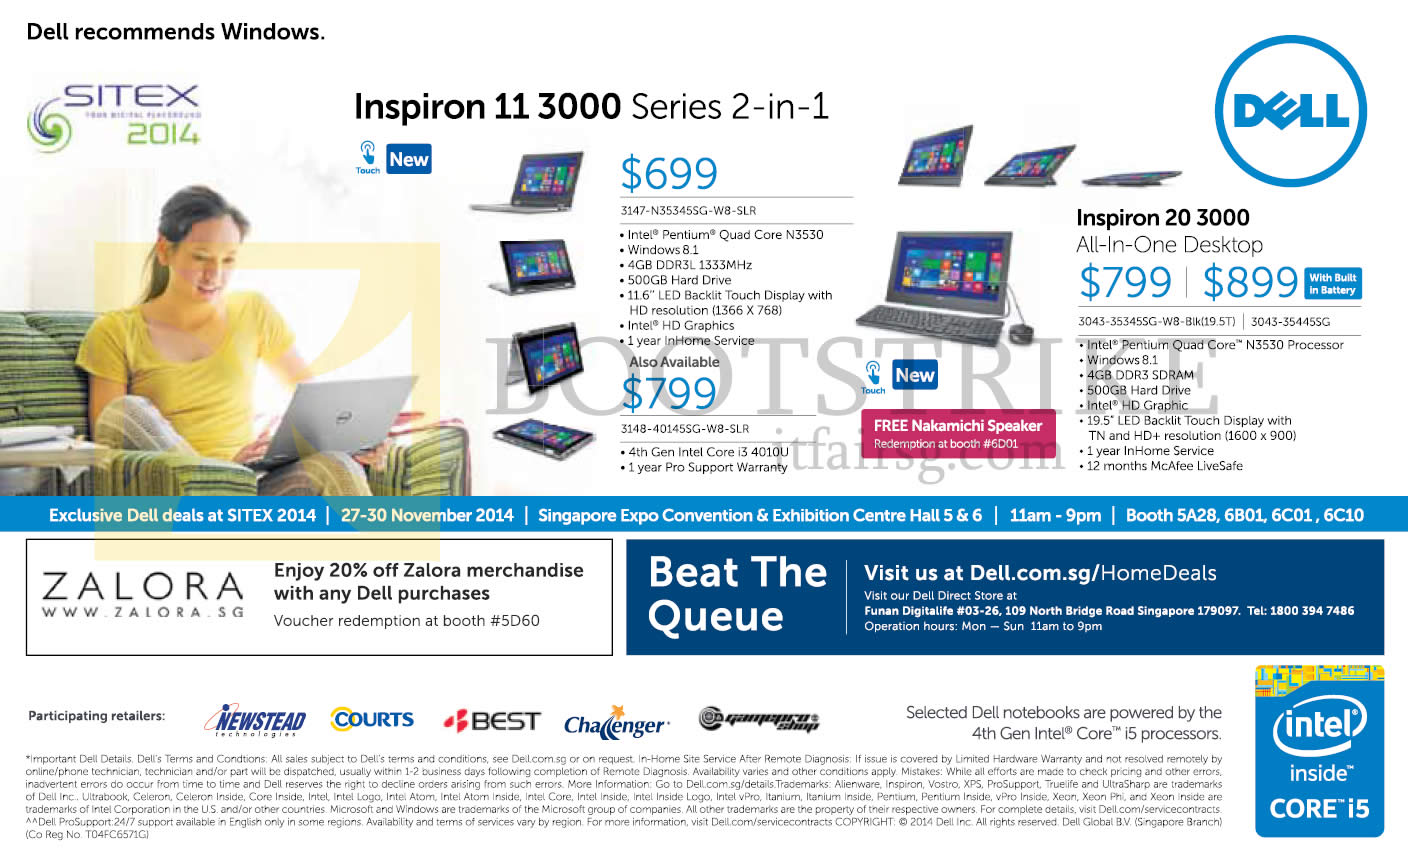 SITEX 2014 price list image brochure of Dell Notebooks, AIO Desktop PCs Inspiron 11 3000 Series, Inspiron 20 3000